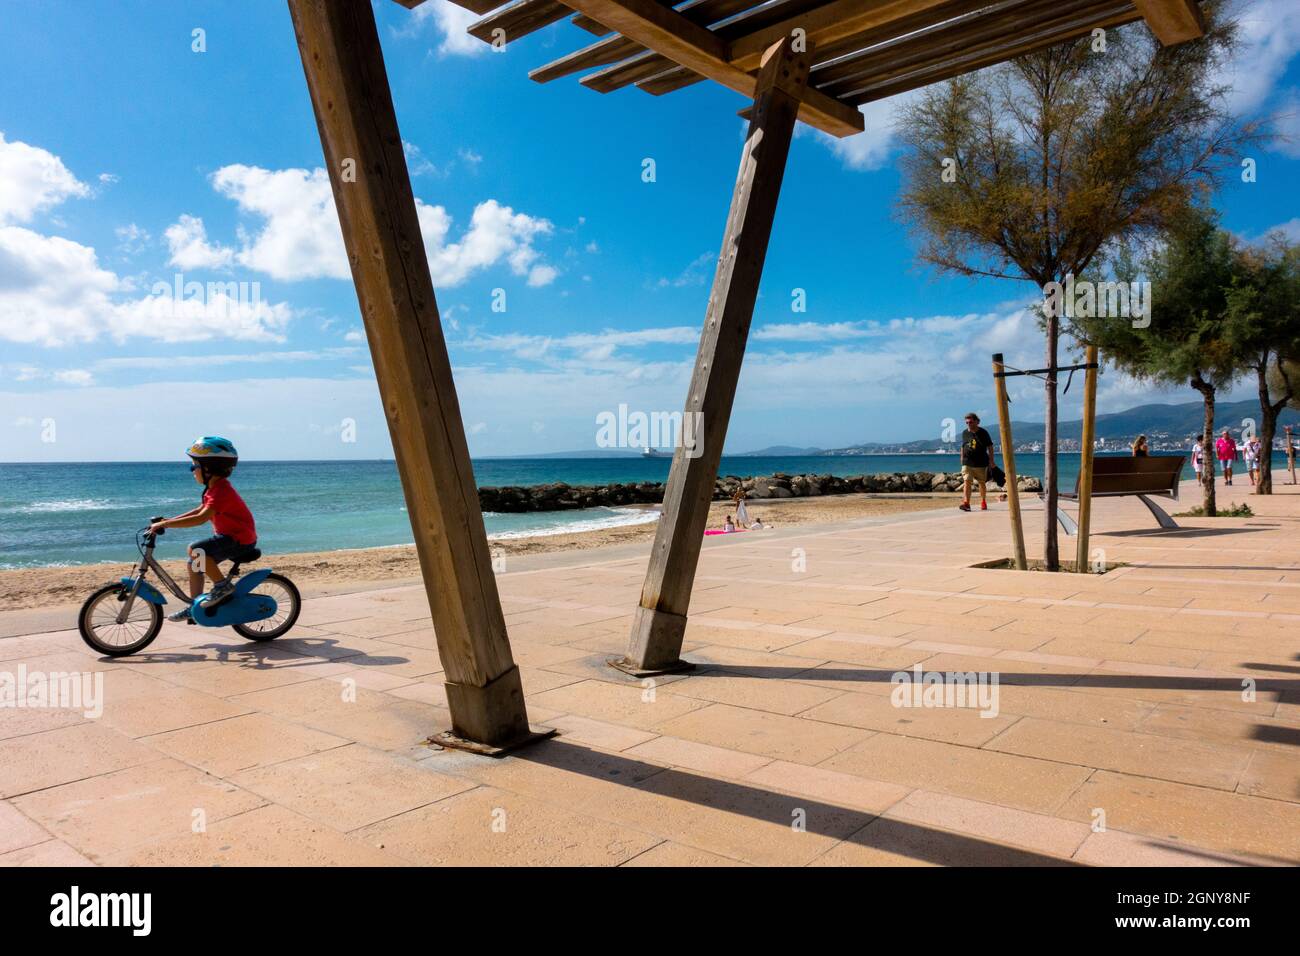 A child riding a bike on a cycle path at sea promenade Paseo Maritimo El Molinar, Palma de Mallorca Spain paved public walk along seafront toddler Stock Photo